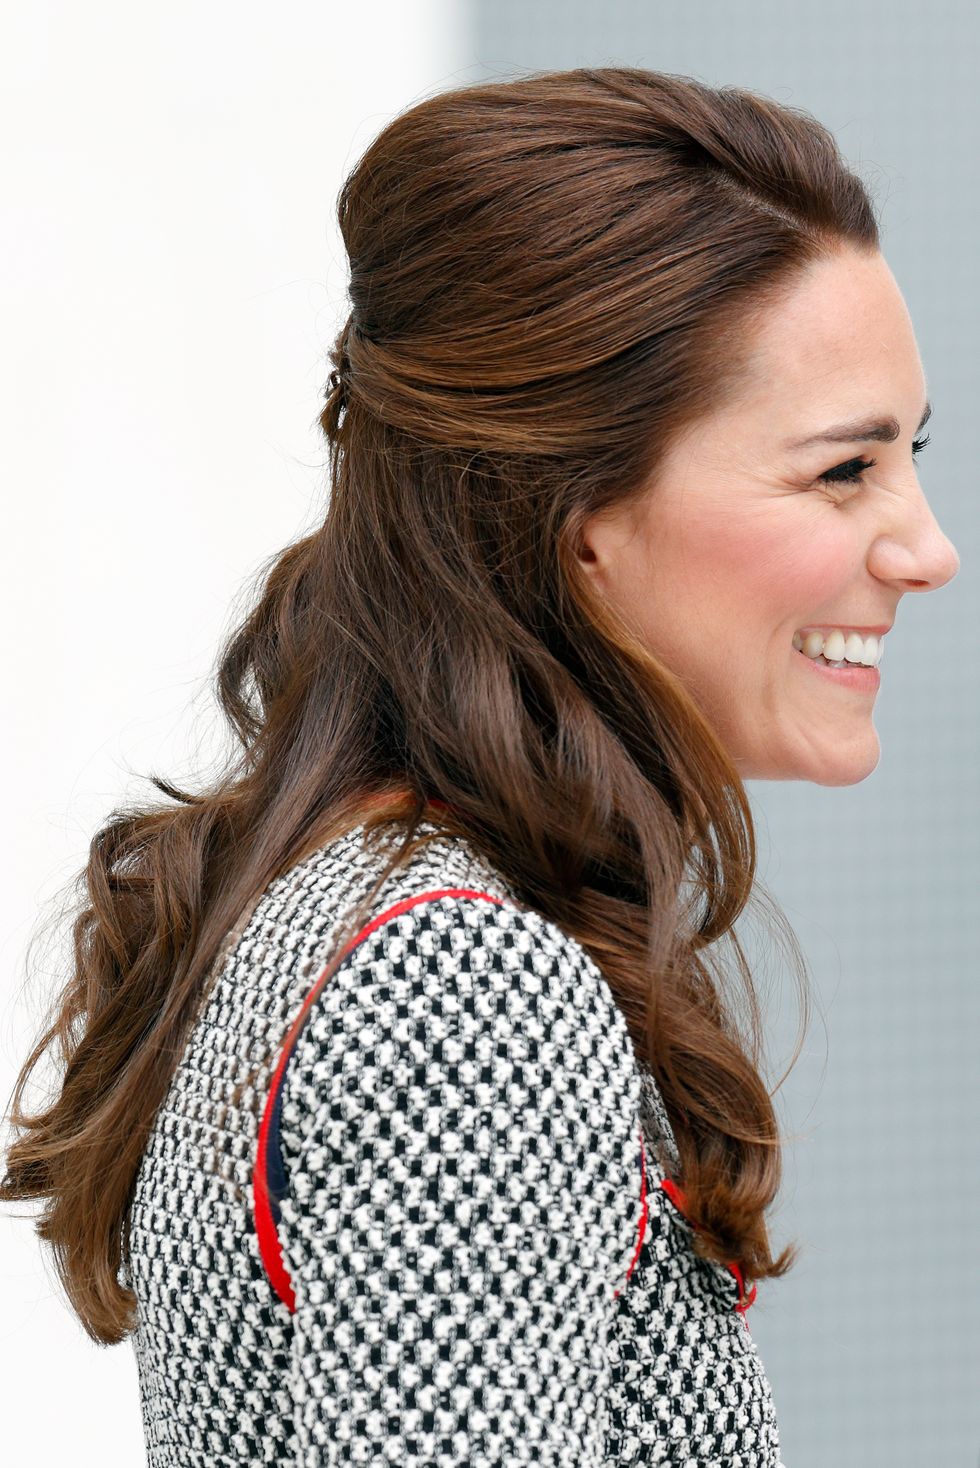 Kate Middleton Hairstyle - Voluminous Half-Up Bouffant